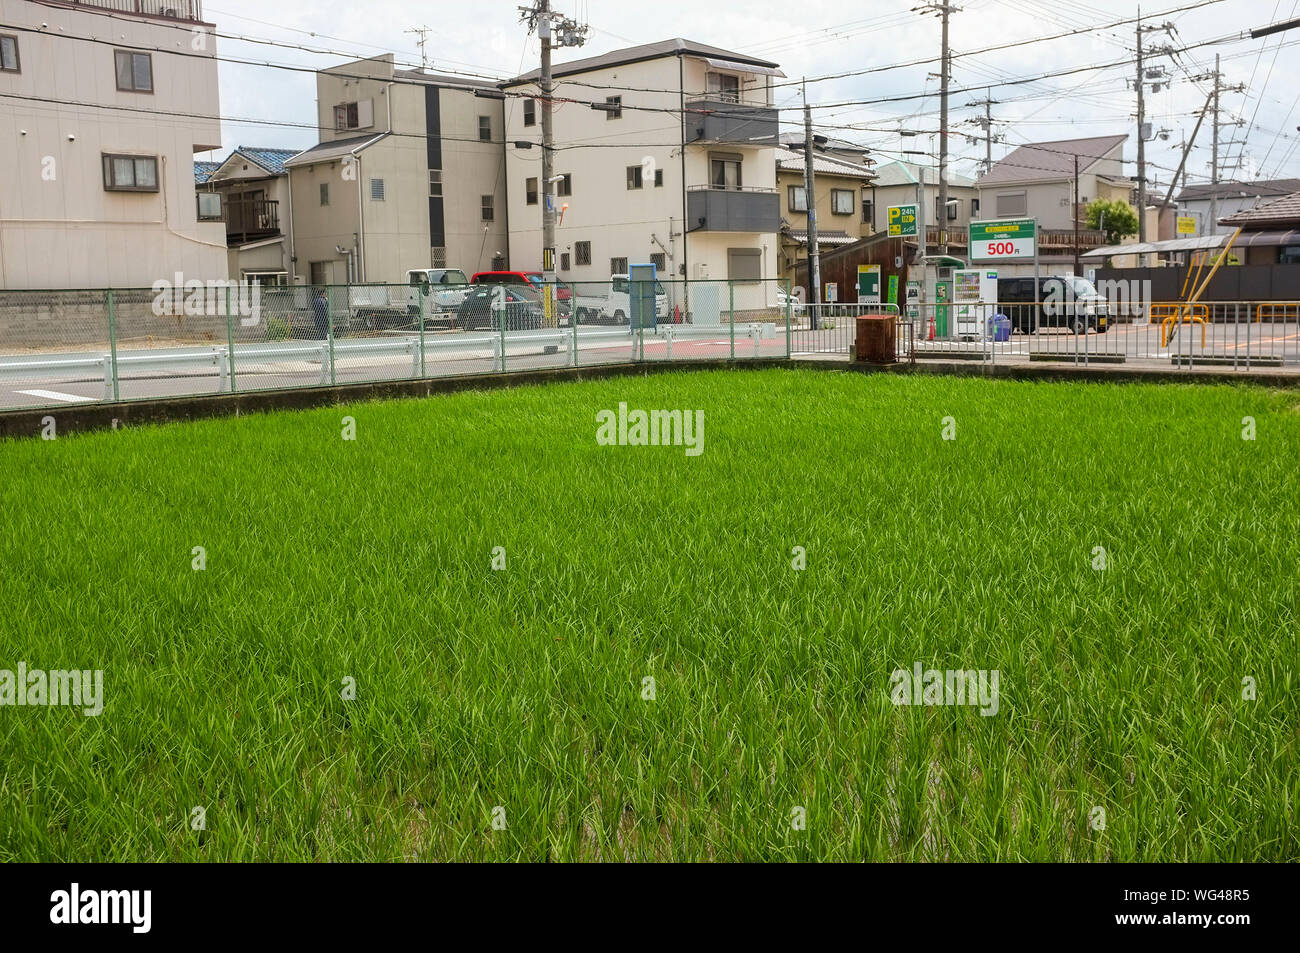 Rice paddy or paddy field in urban area in Osaka, Japan. Stock Photo